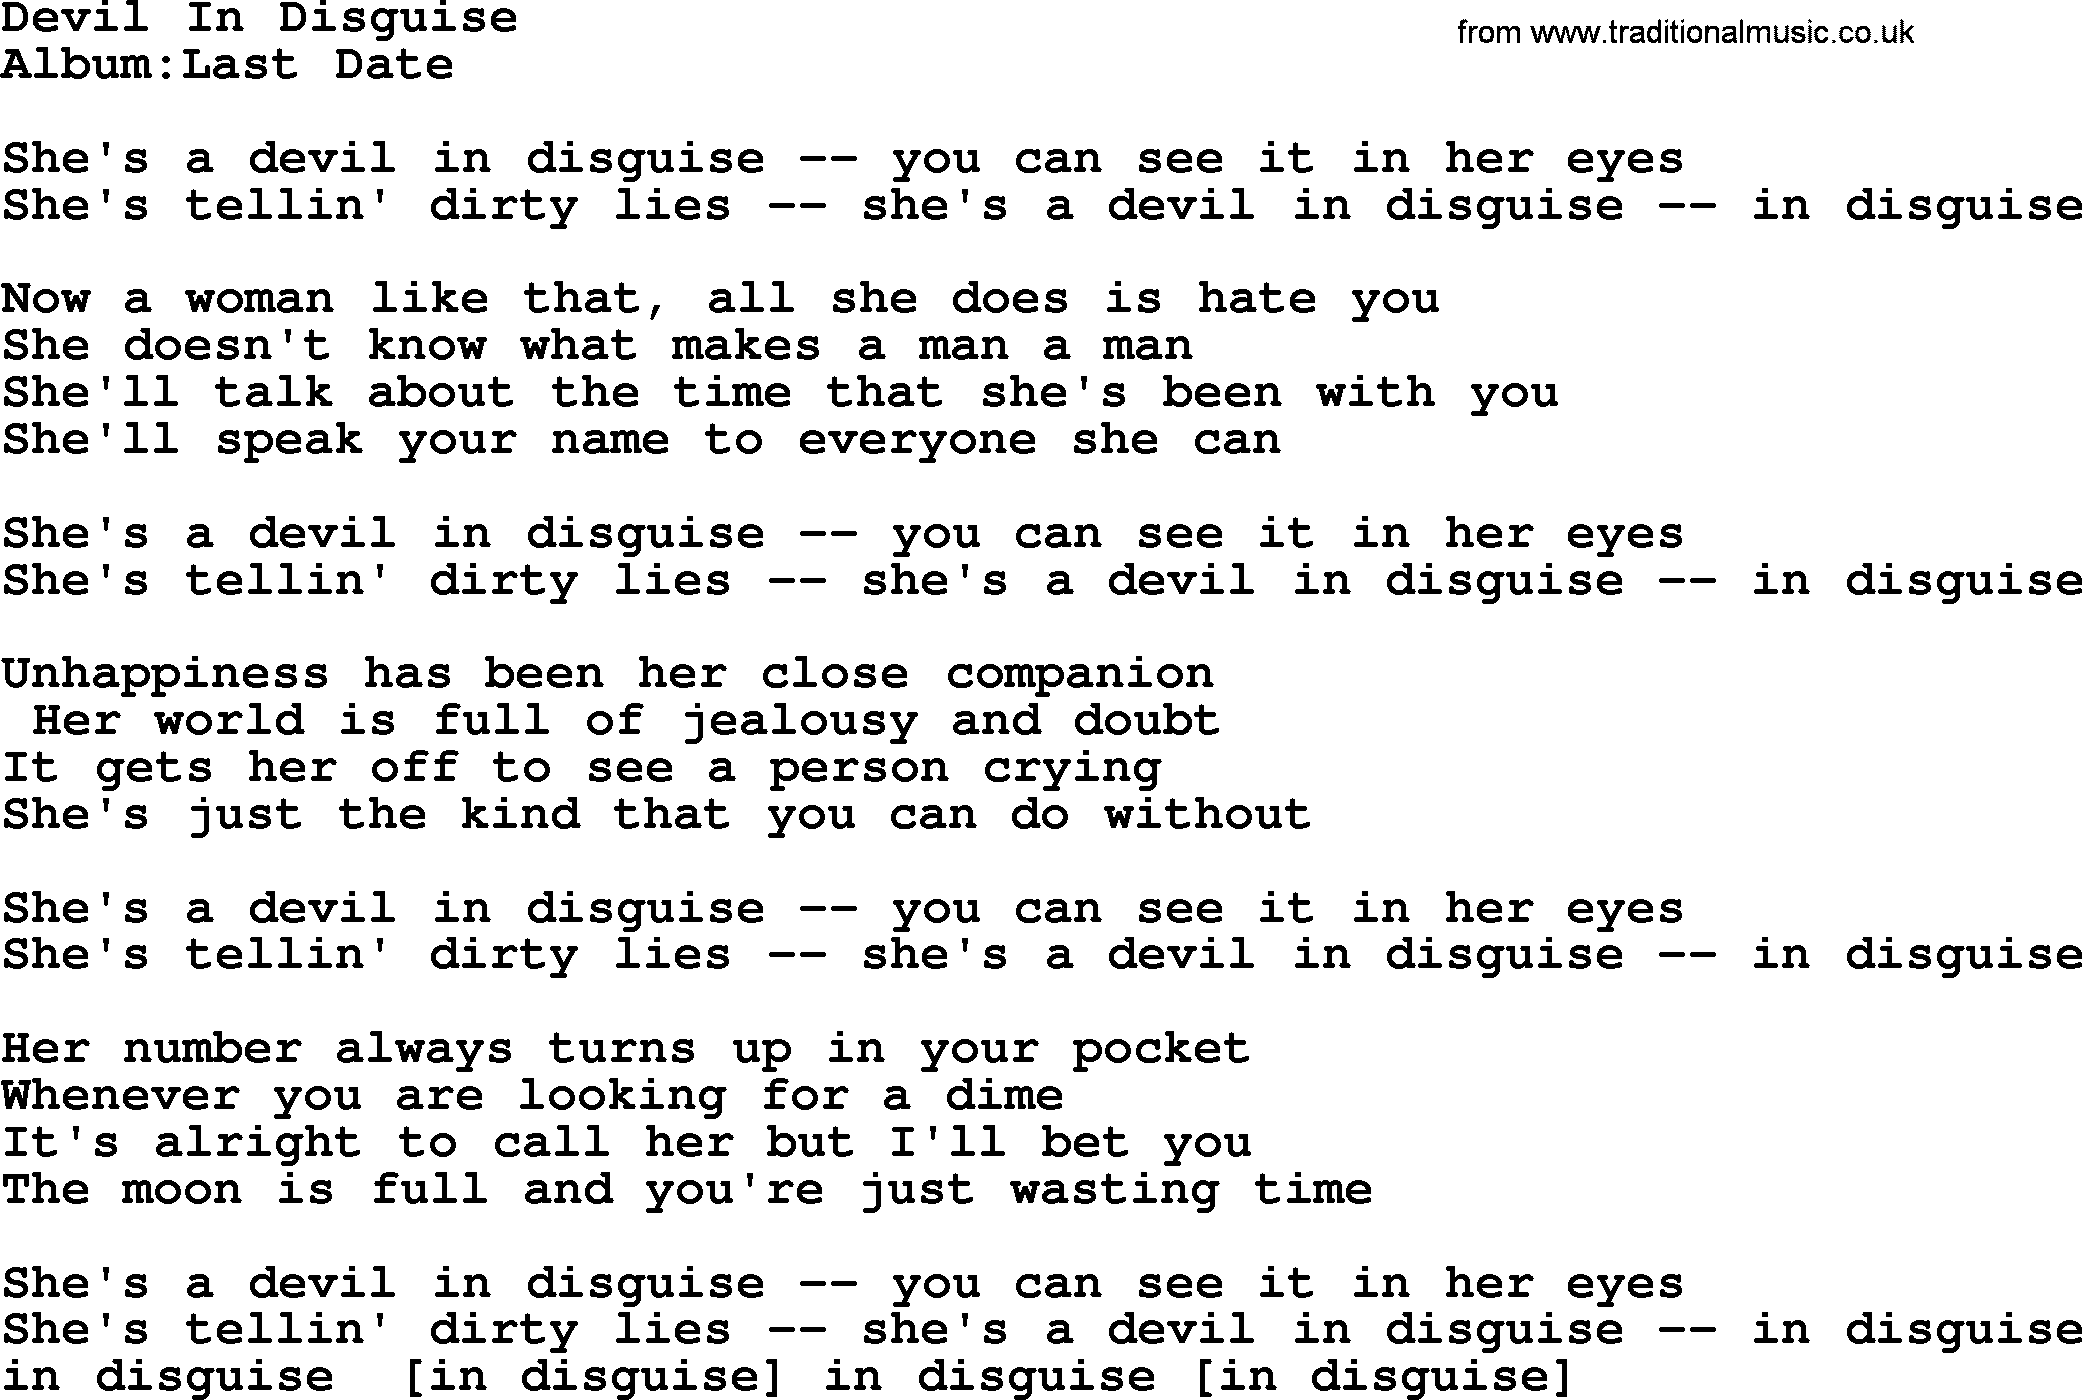 Emmylou Harris song: Devil In Disguise lyrics